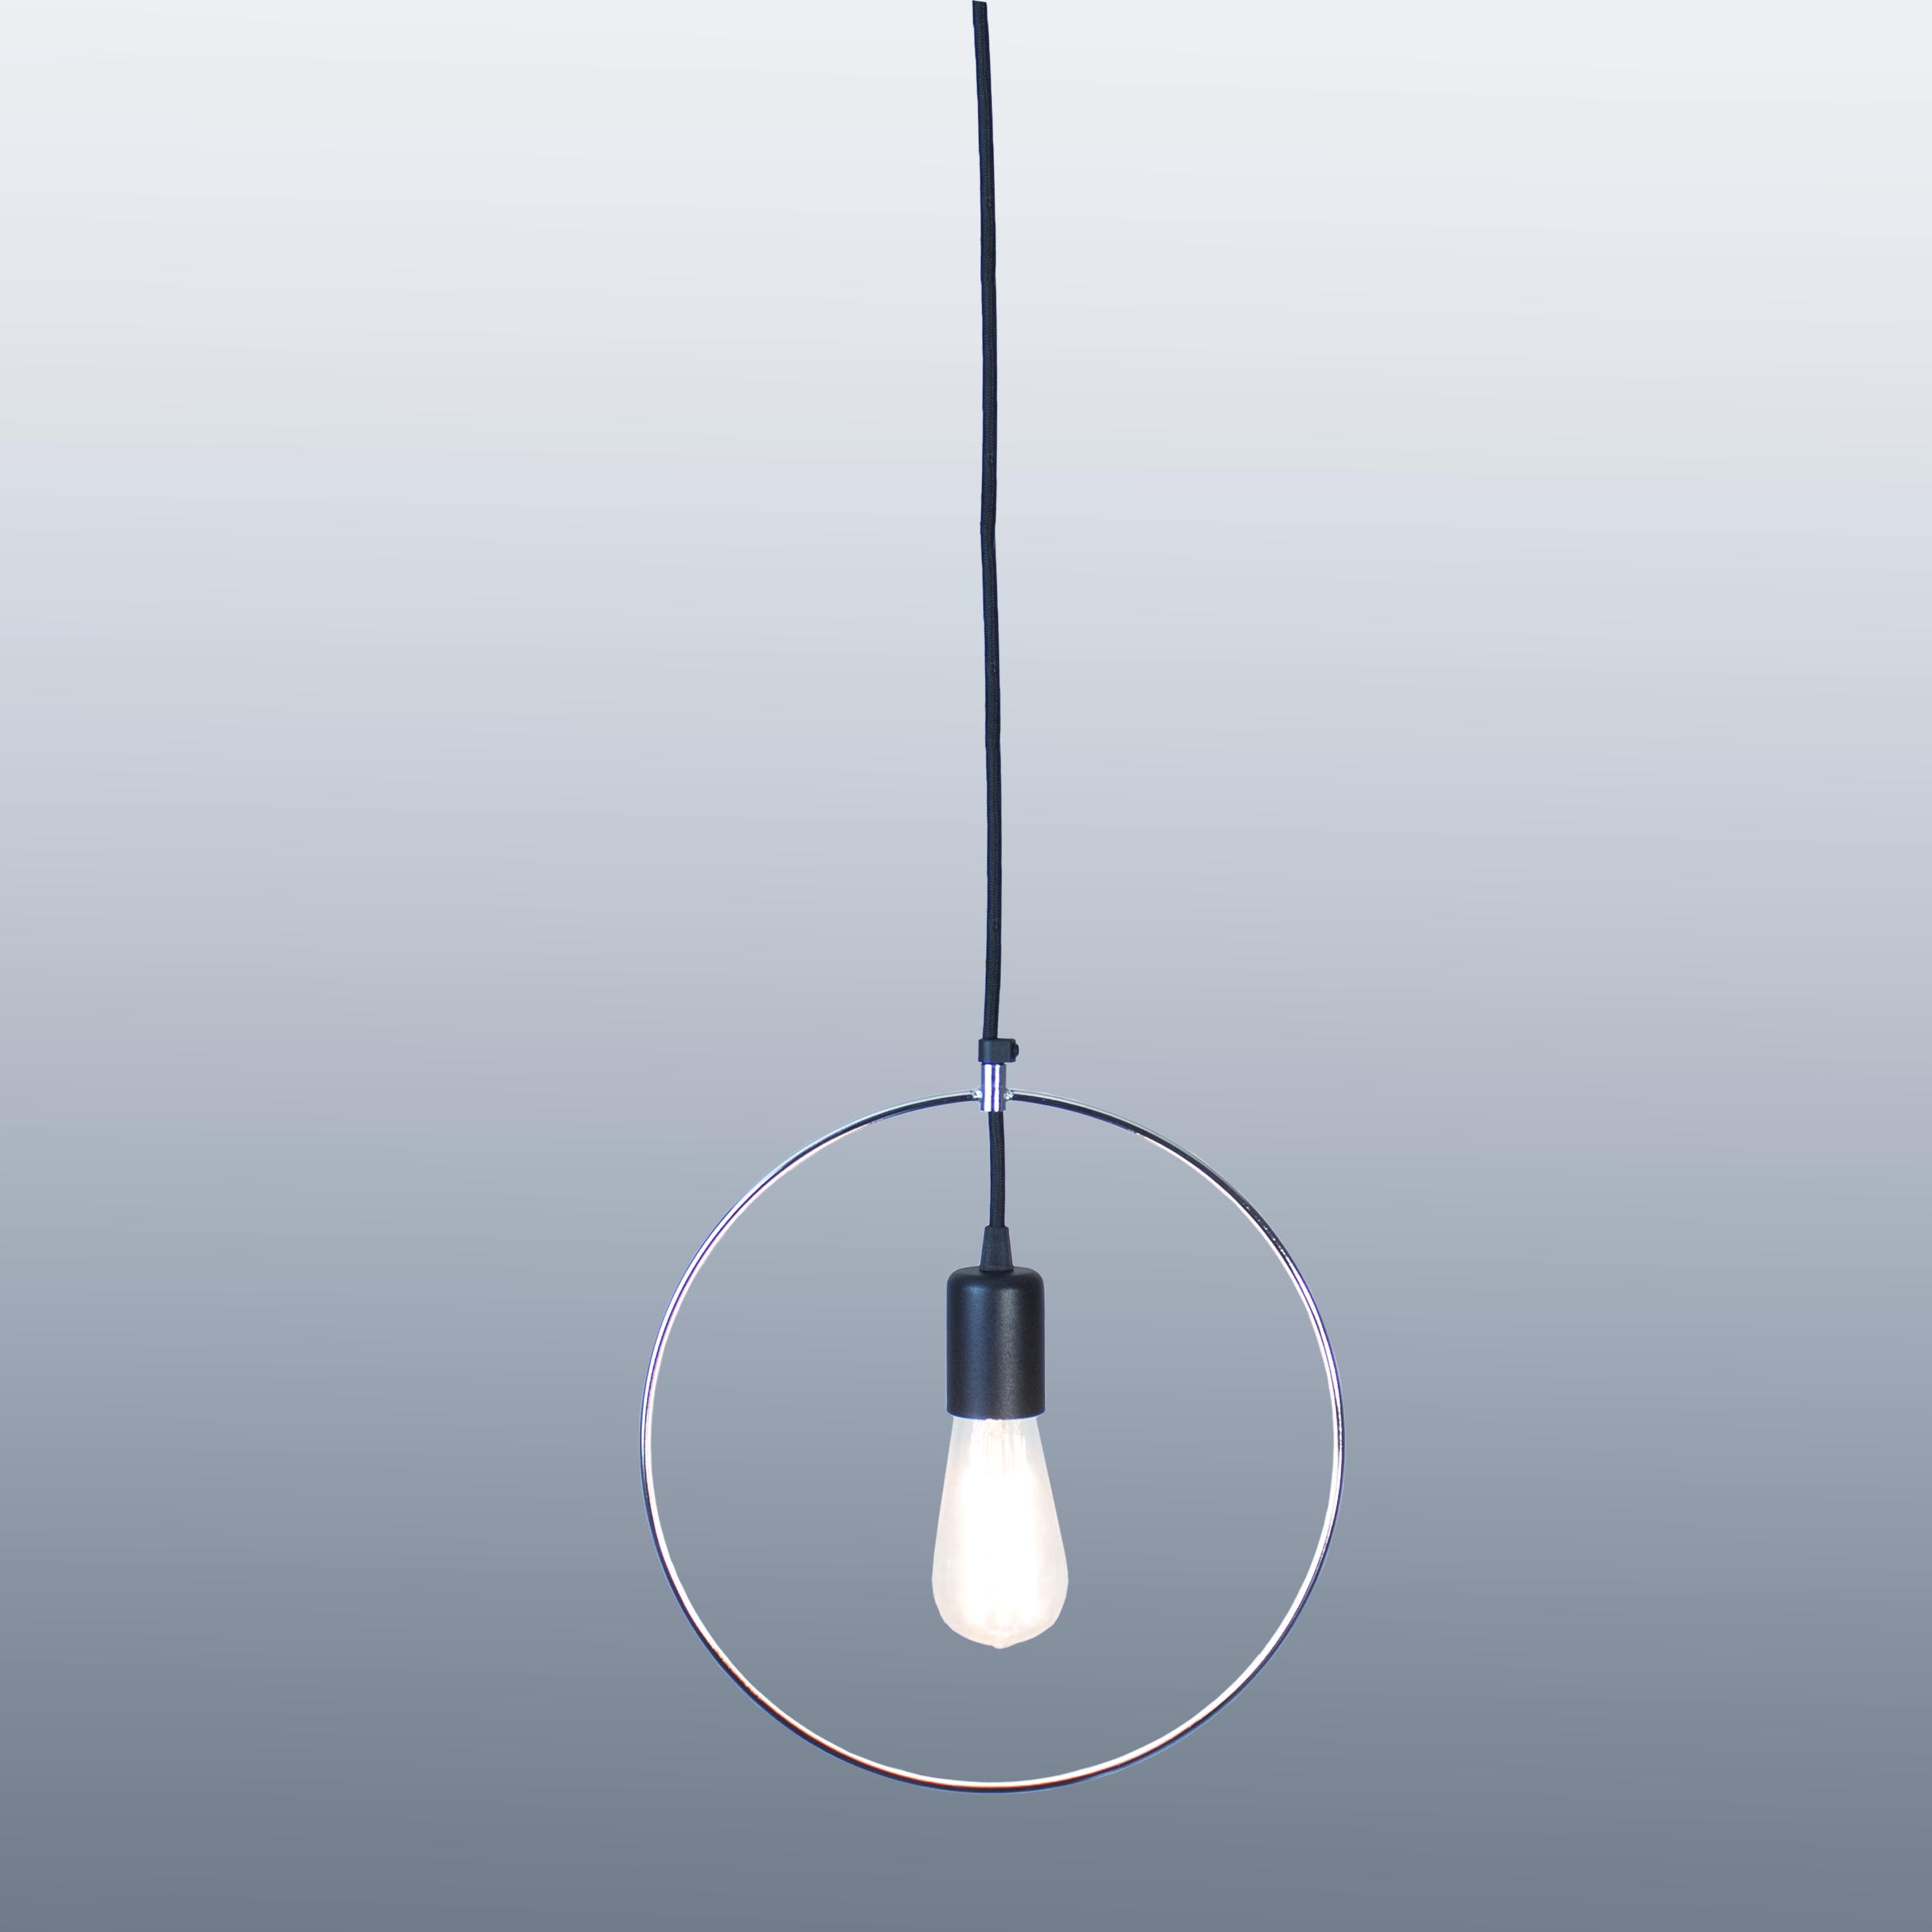 Suspension lamp Geometry black / chrome